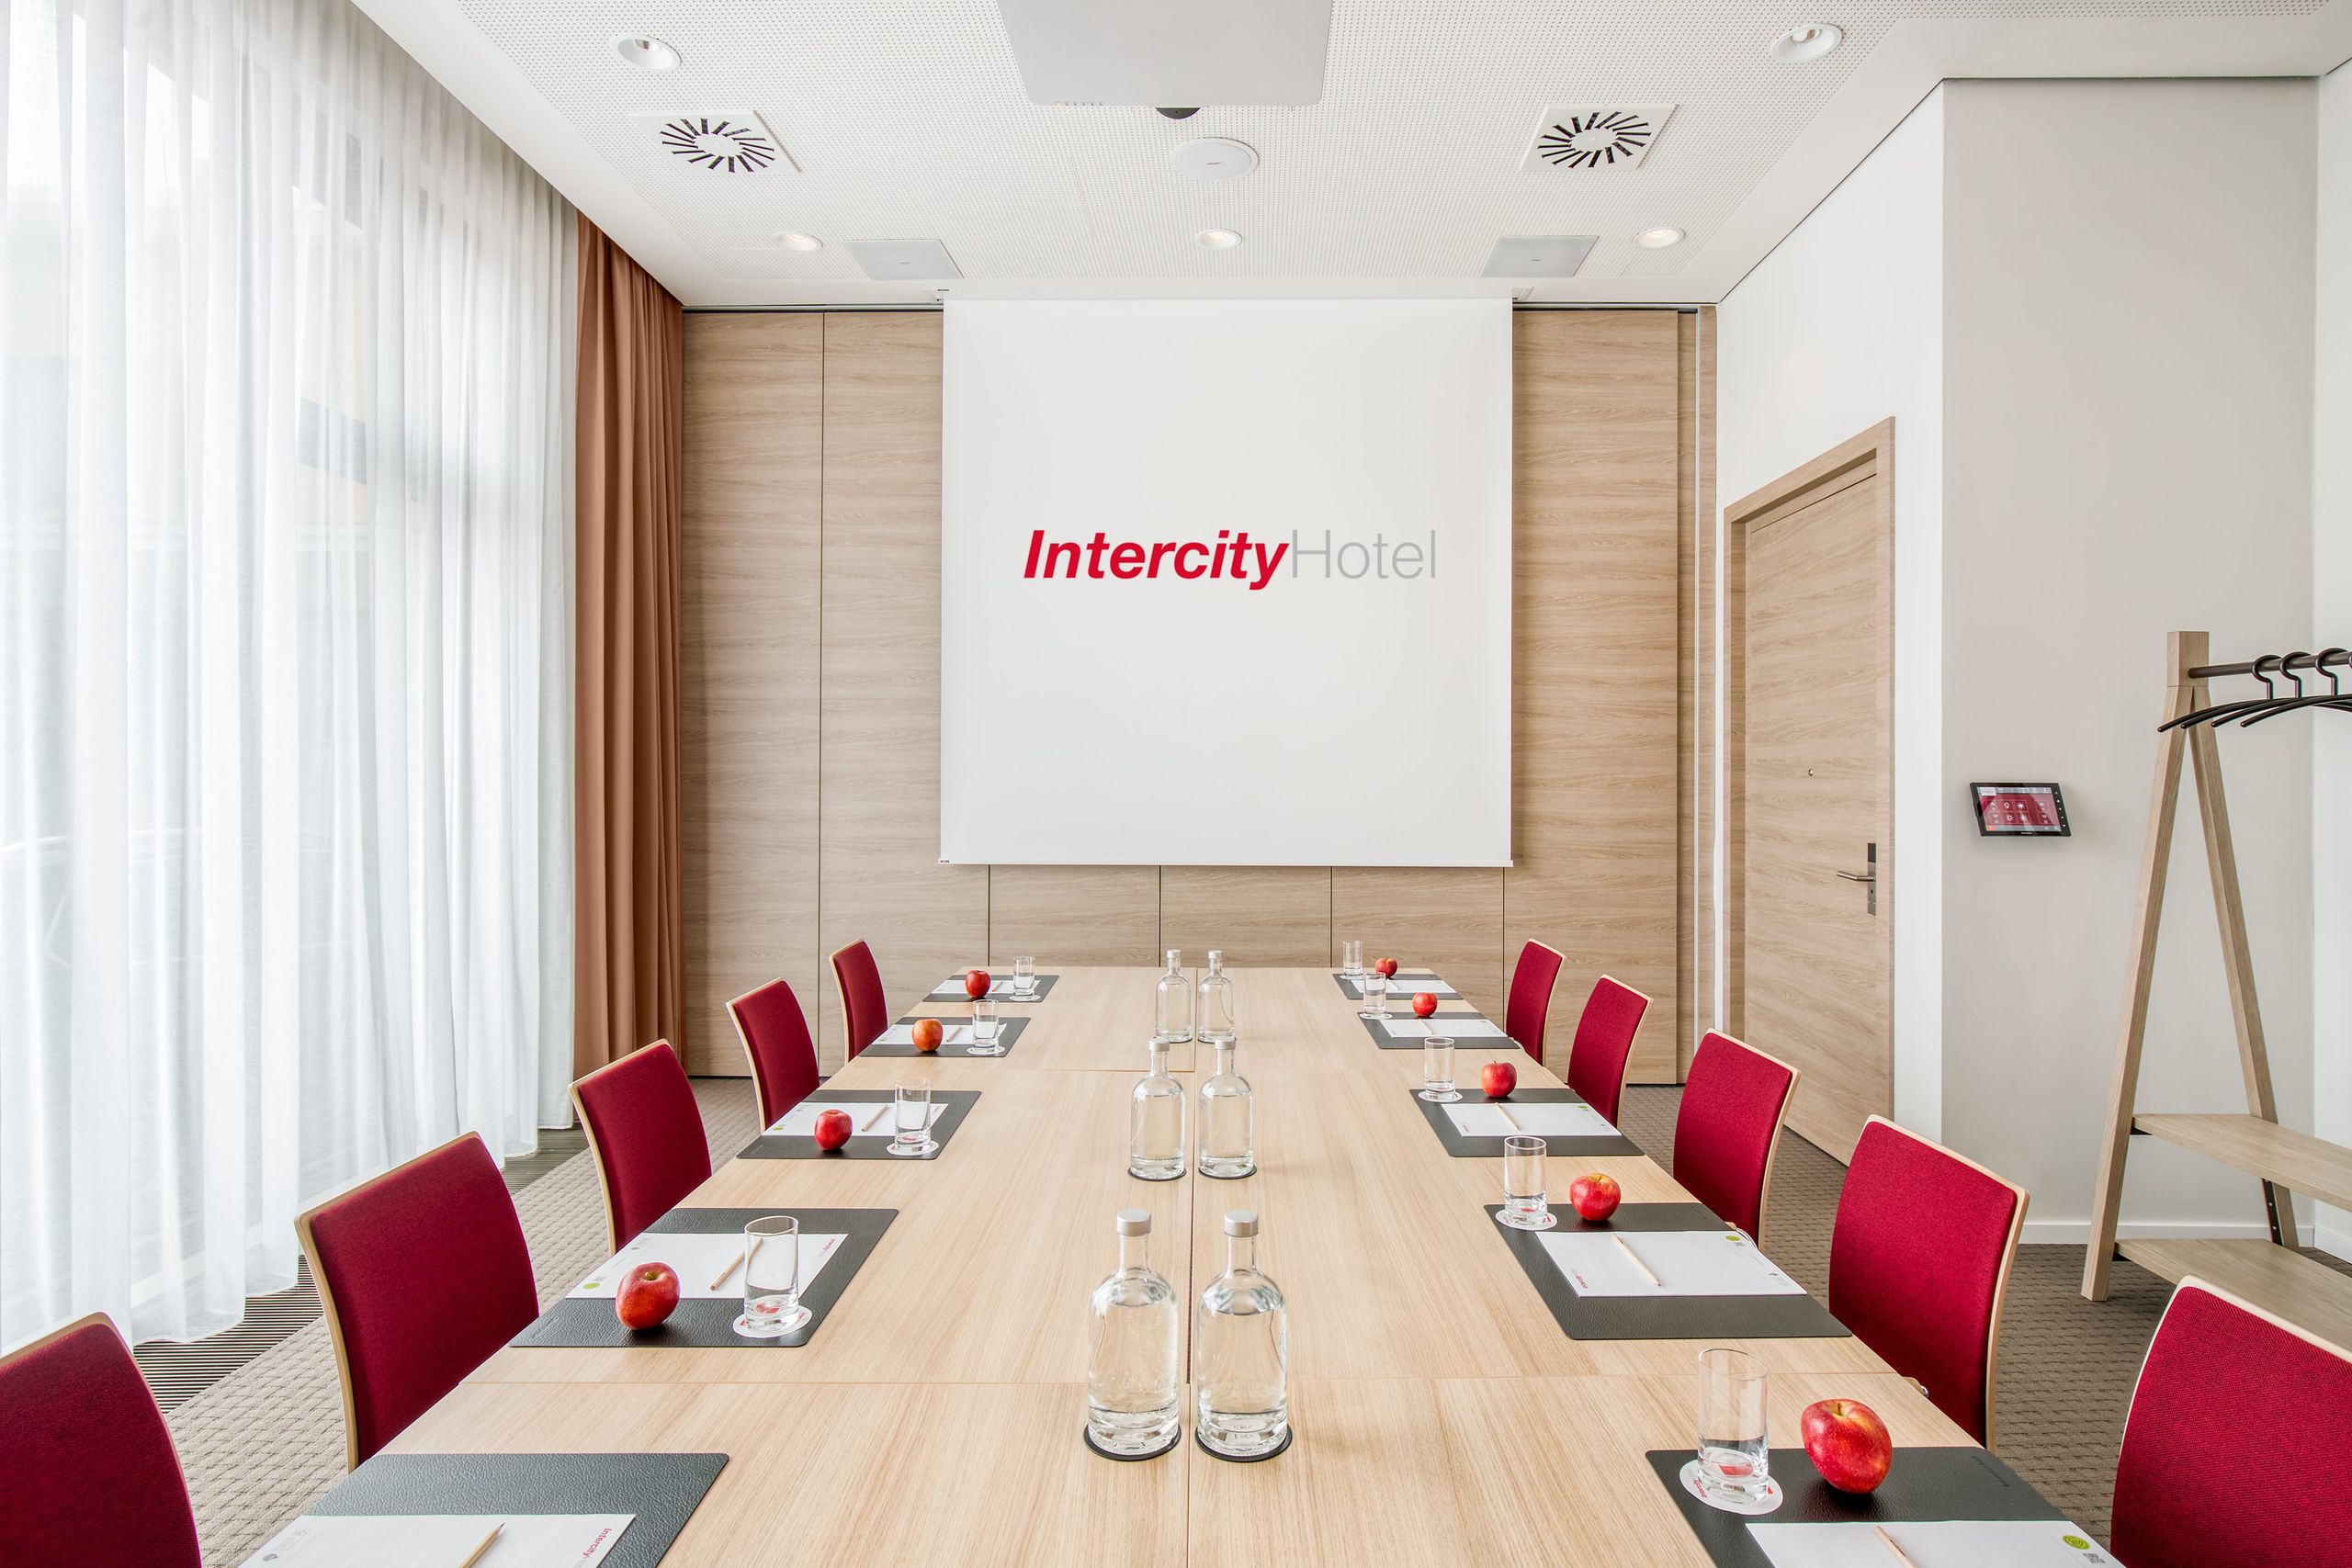 IntercityHotel Hildesheim - Reuniones - Incentivos - Salas de conferencias - Eventos